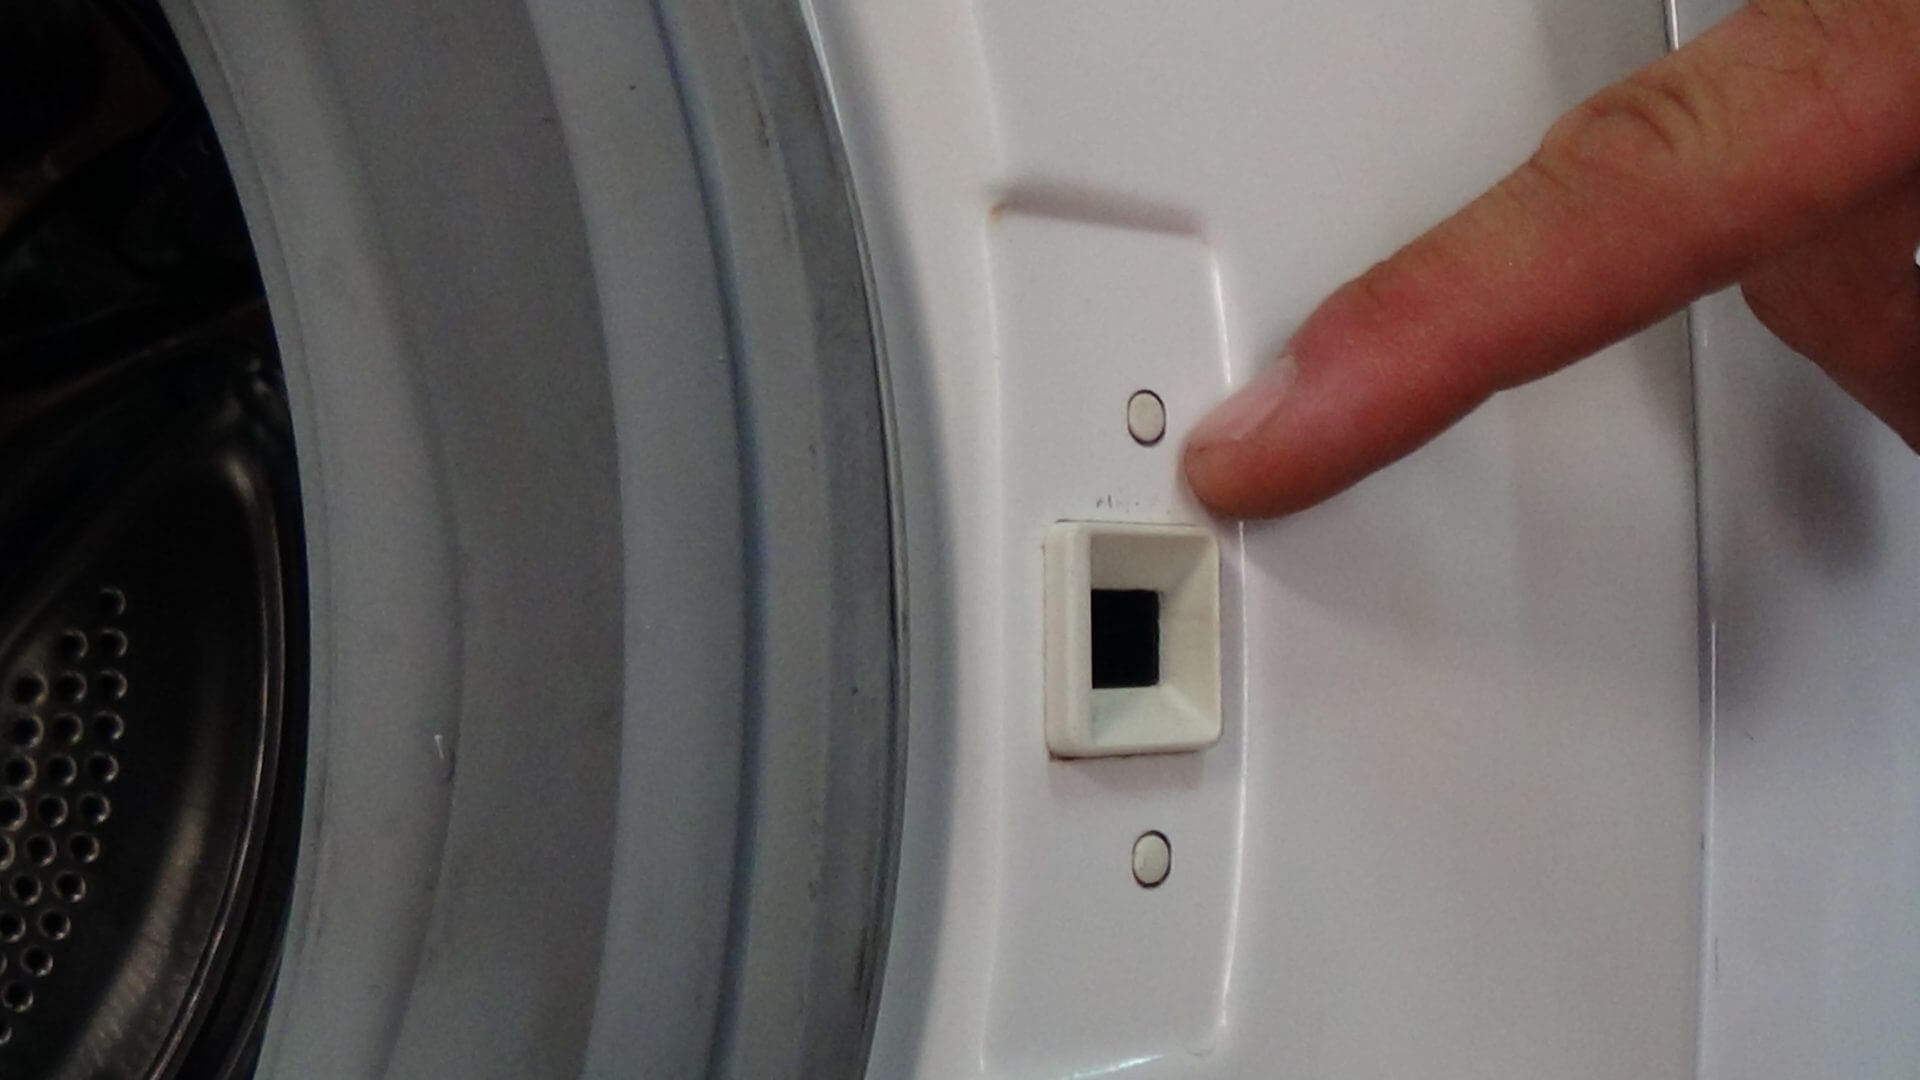 Bosch Washing Machine WAS Door inter lock switch free fitting video on E57 